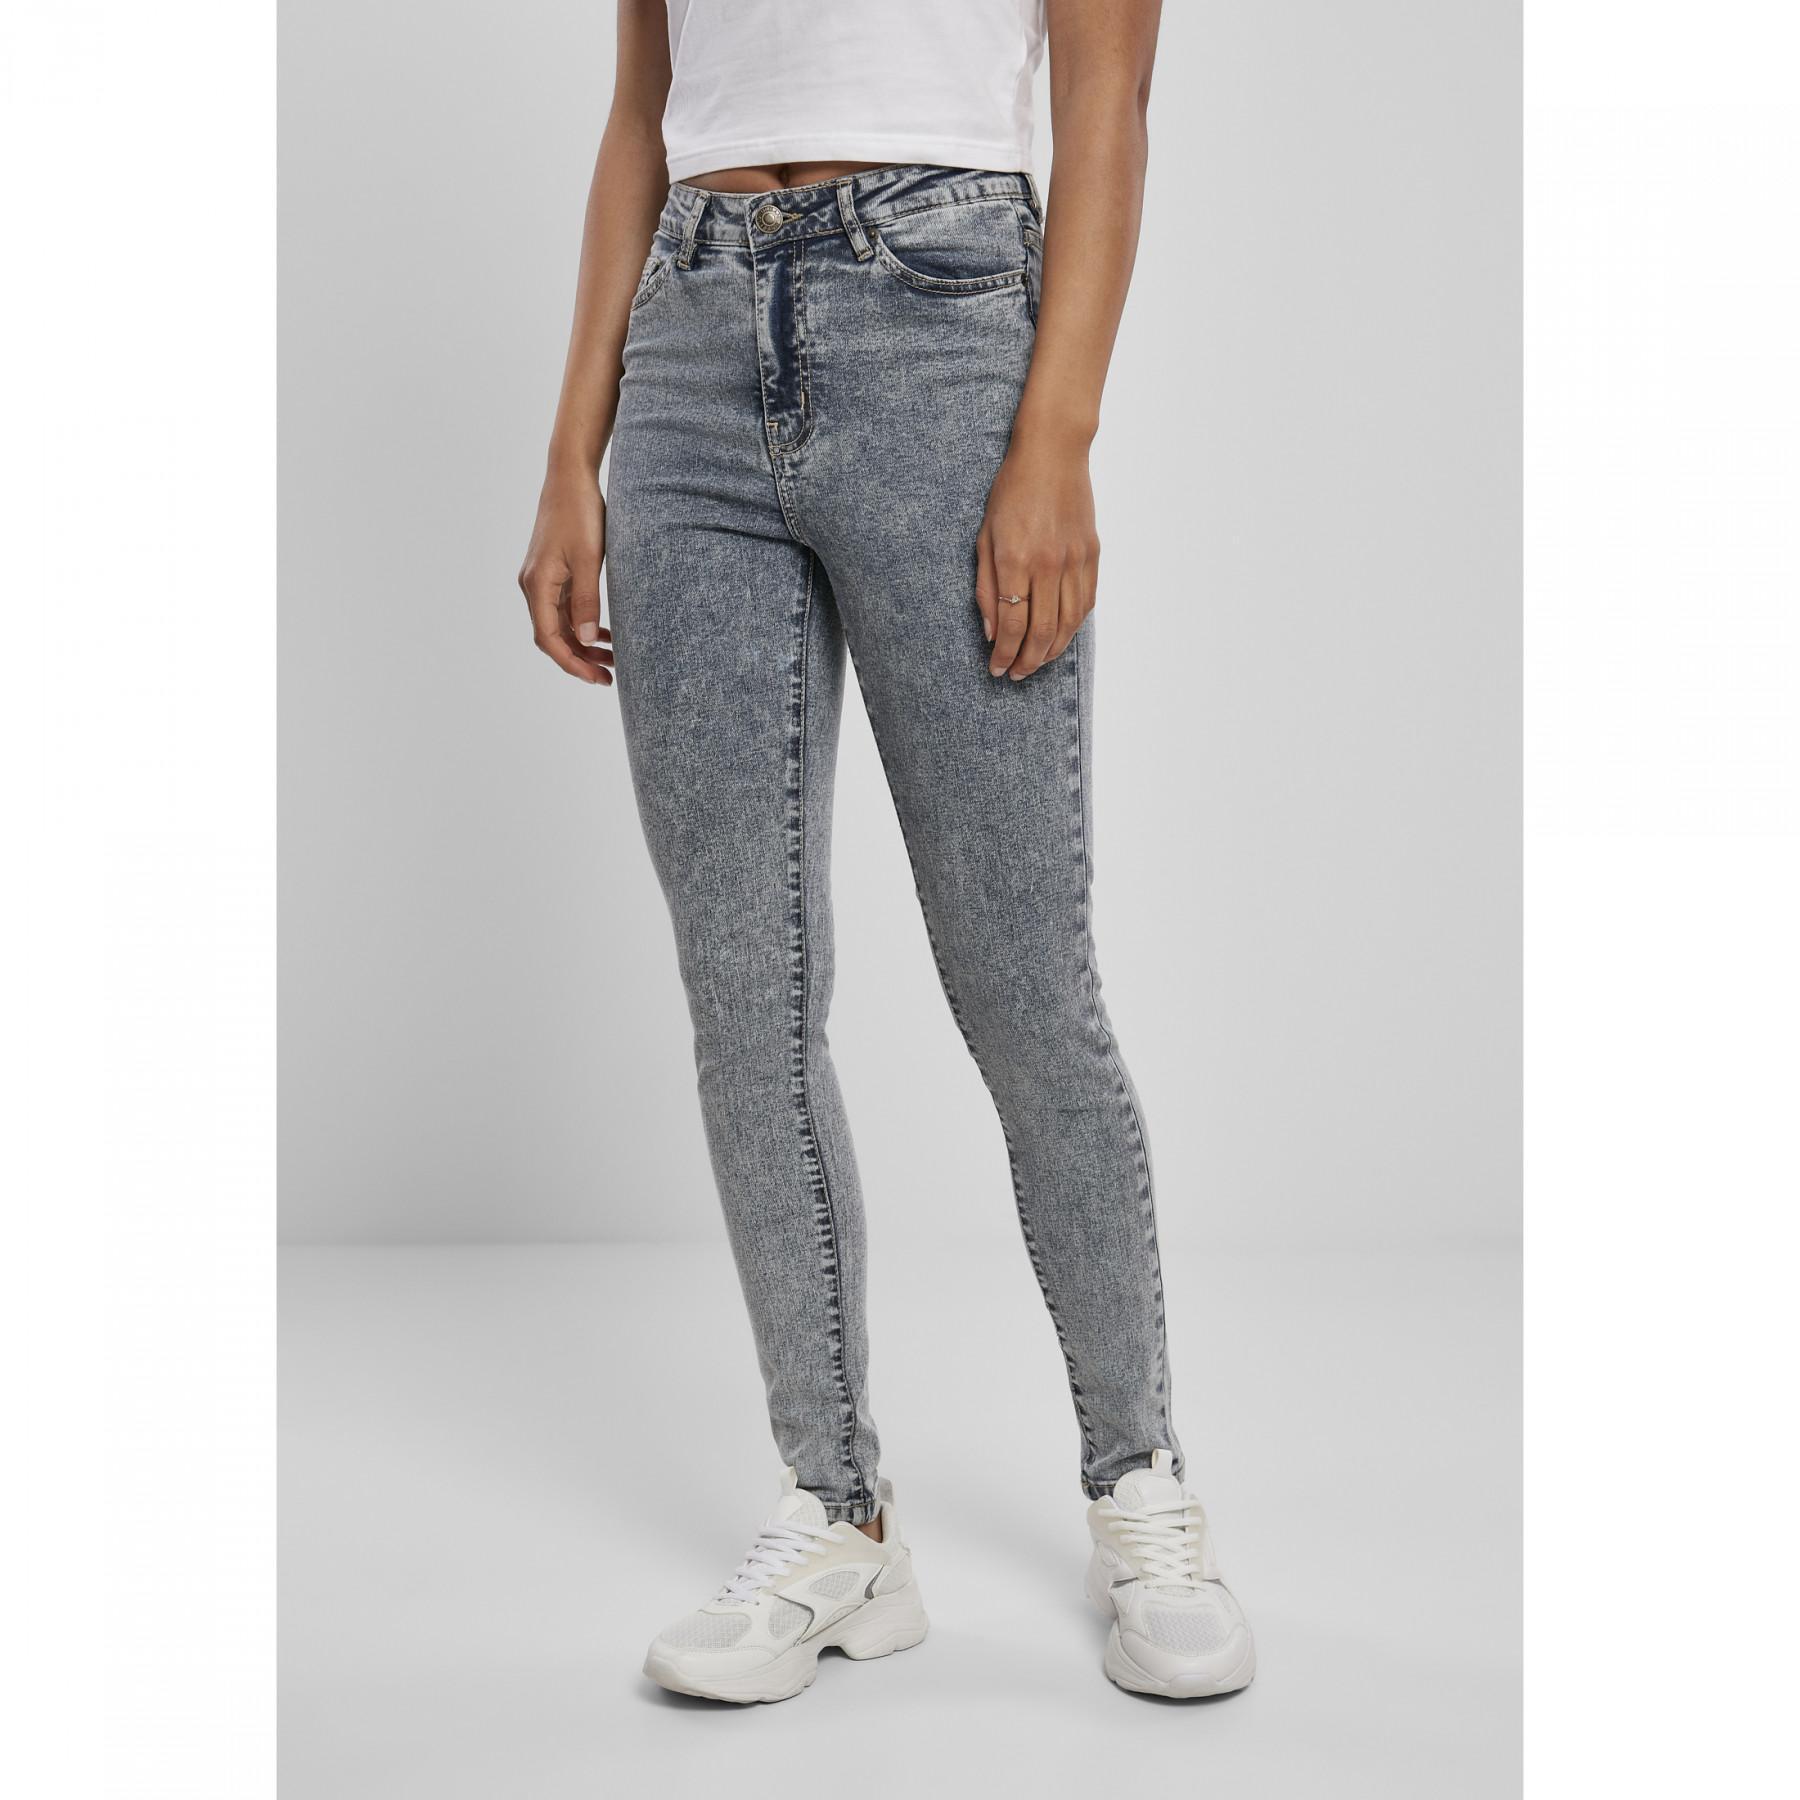 Pantalon jeans femme Urban Classics high waist skinny (grandes tailles)